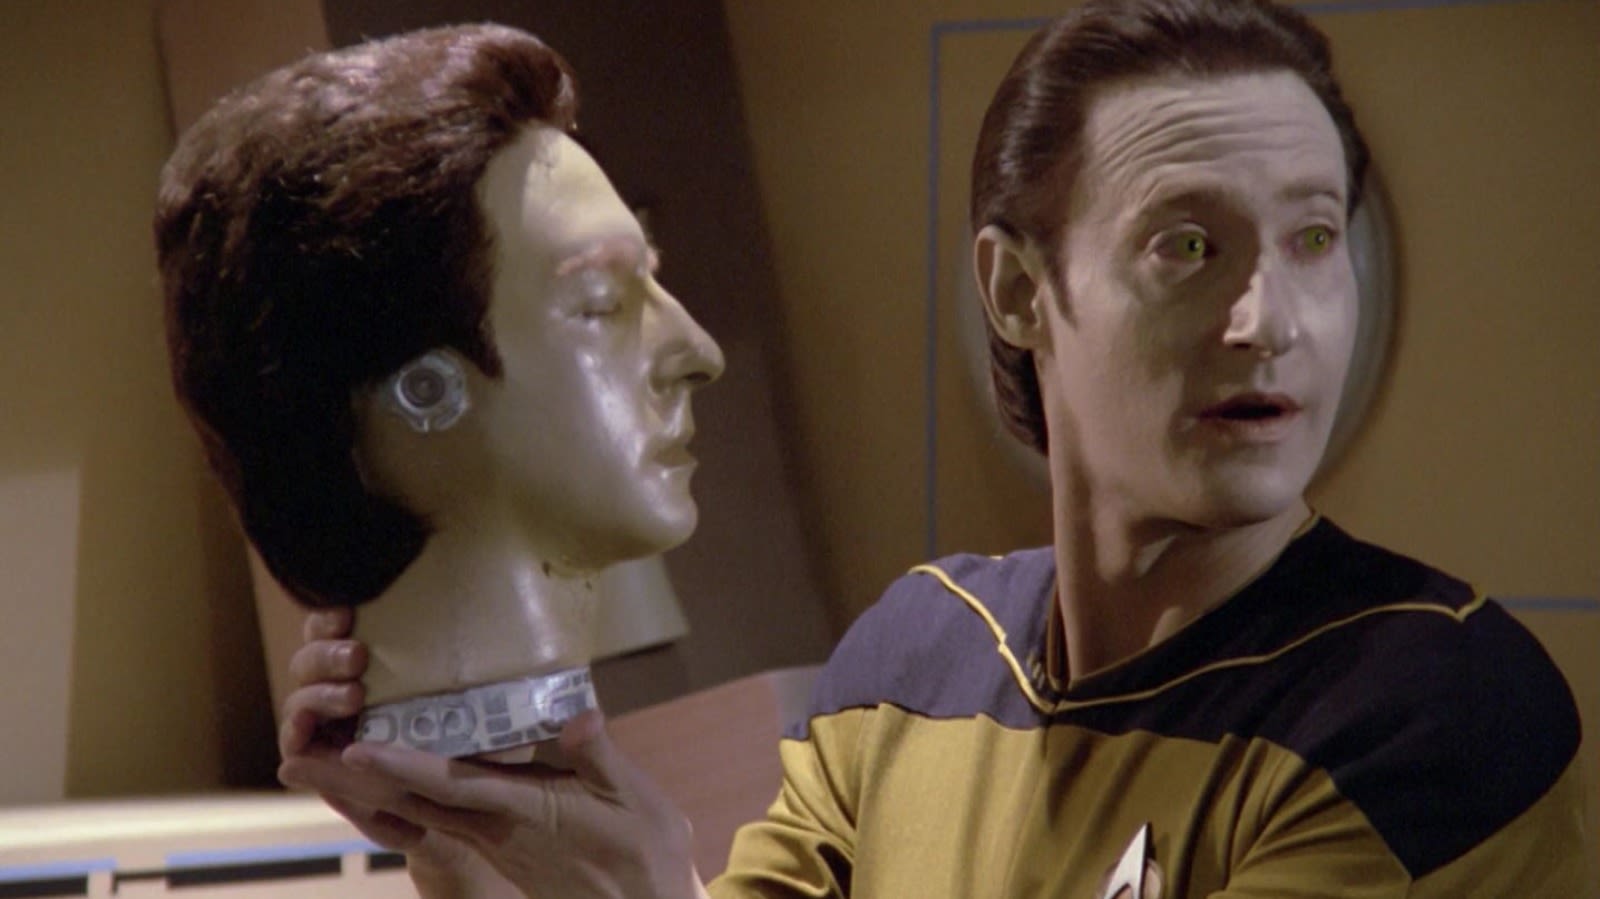 Data Had An Entirely Different Backstory Planned Before Star Trek's Datalore - SlashFilm